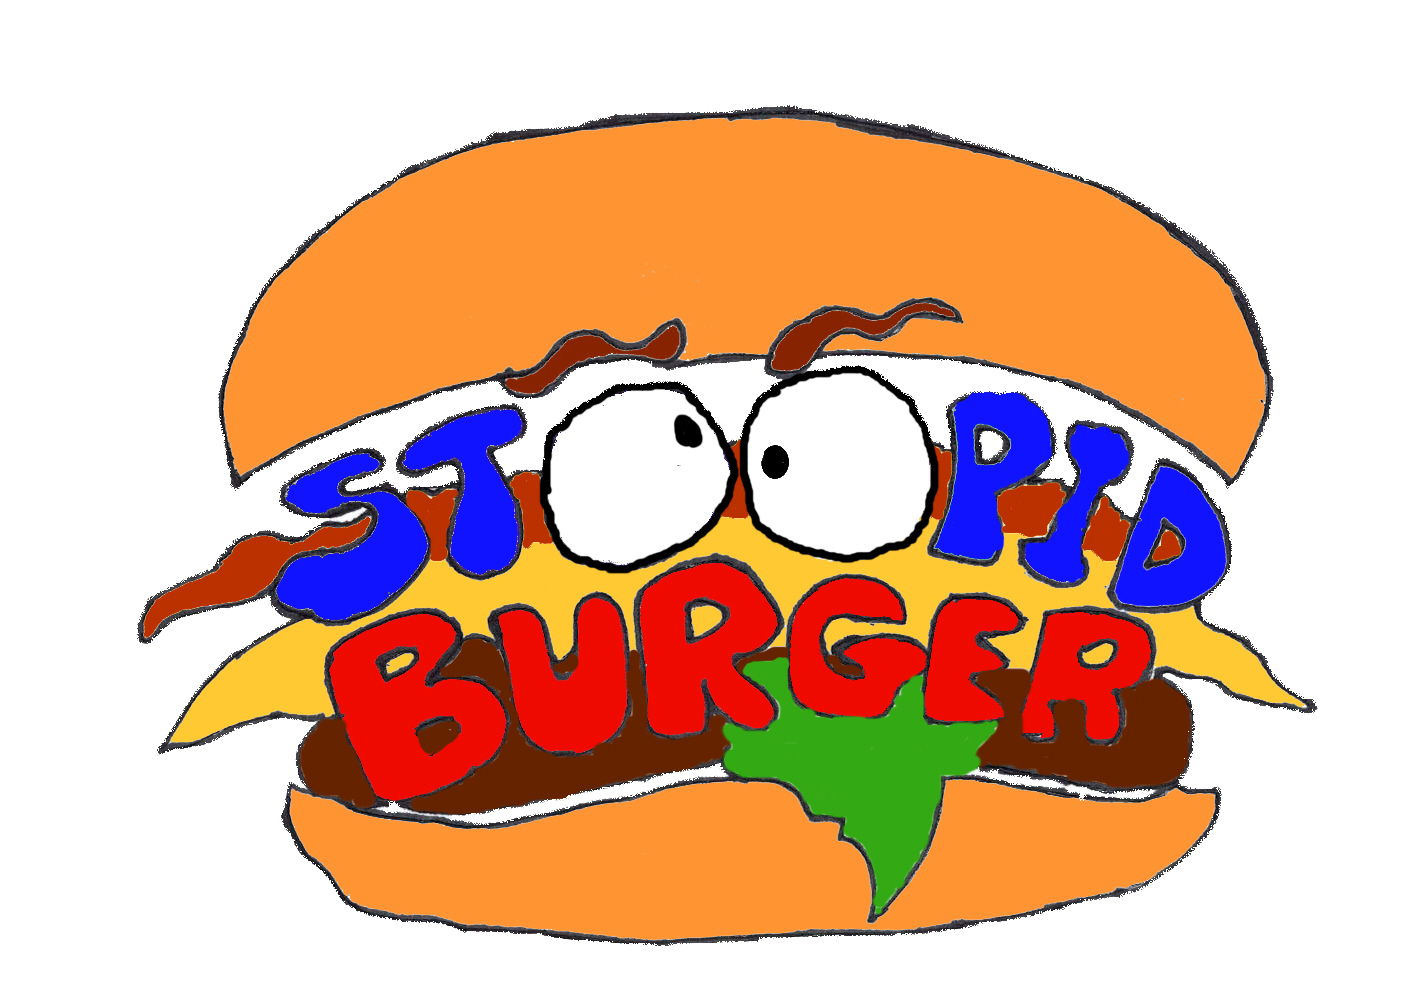 Stoopid Burger